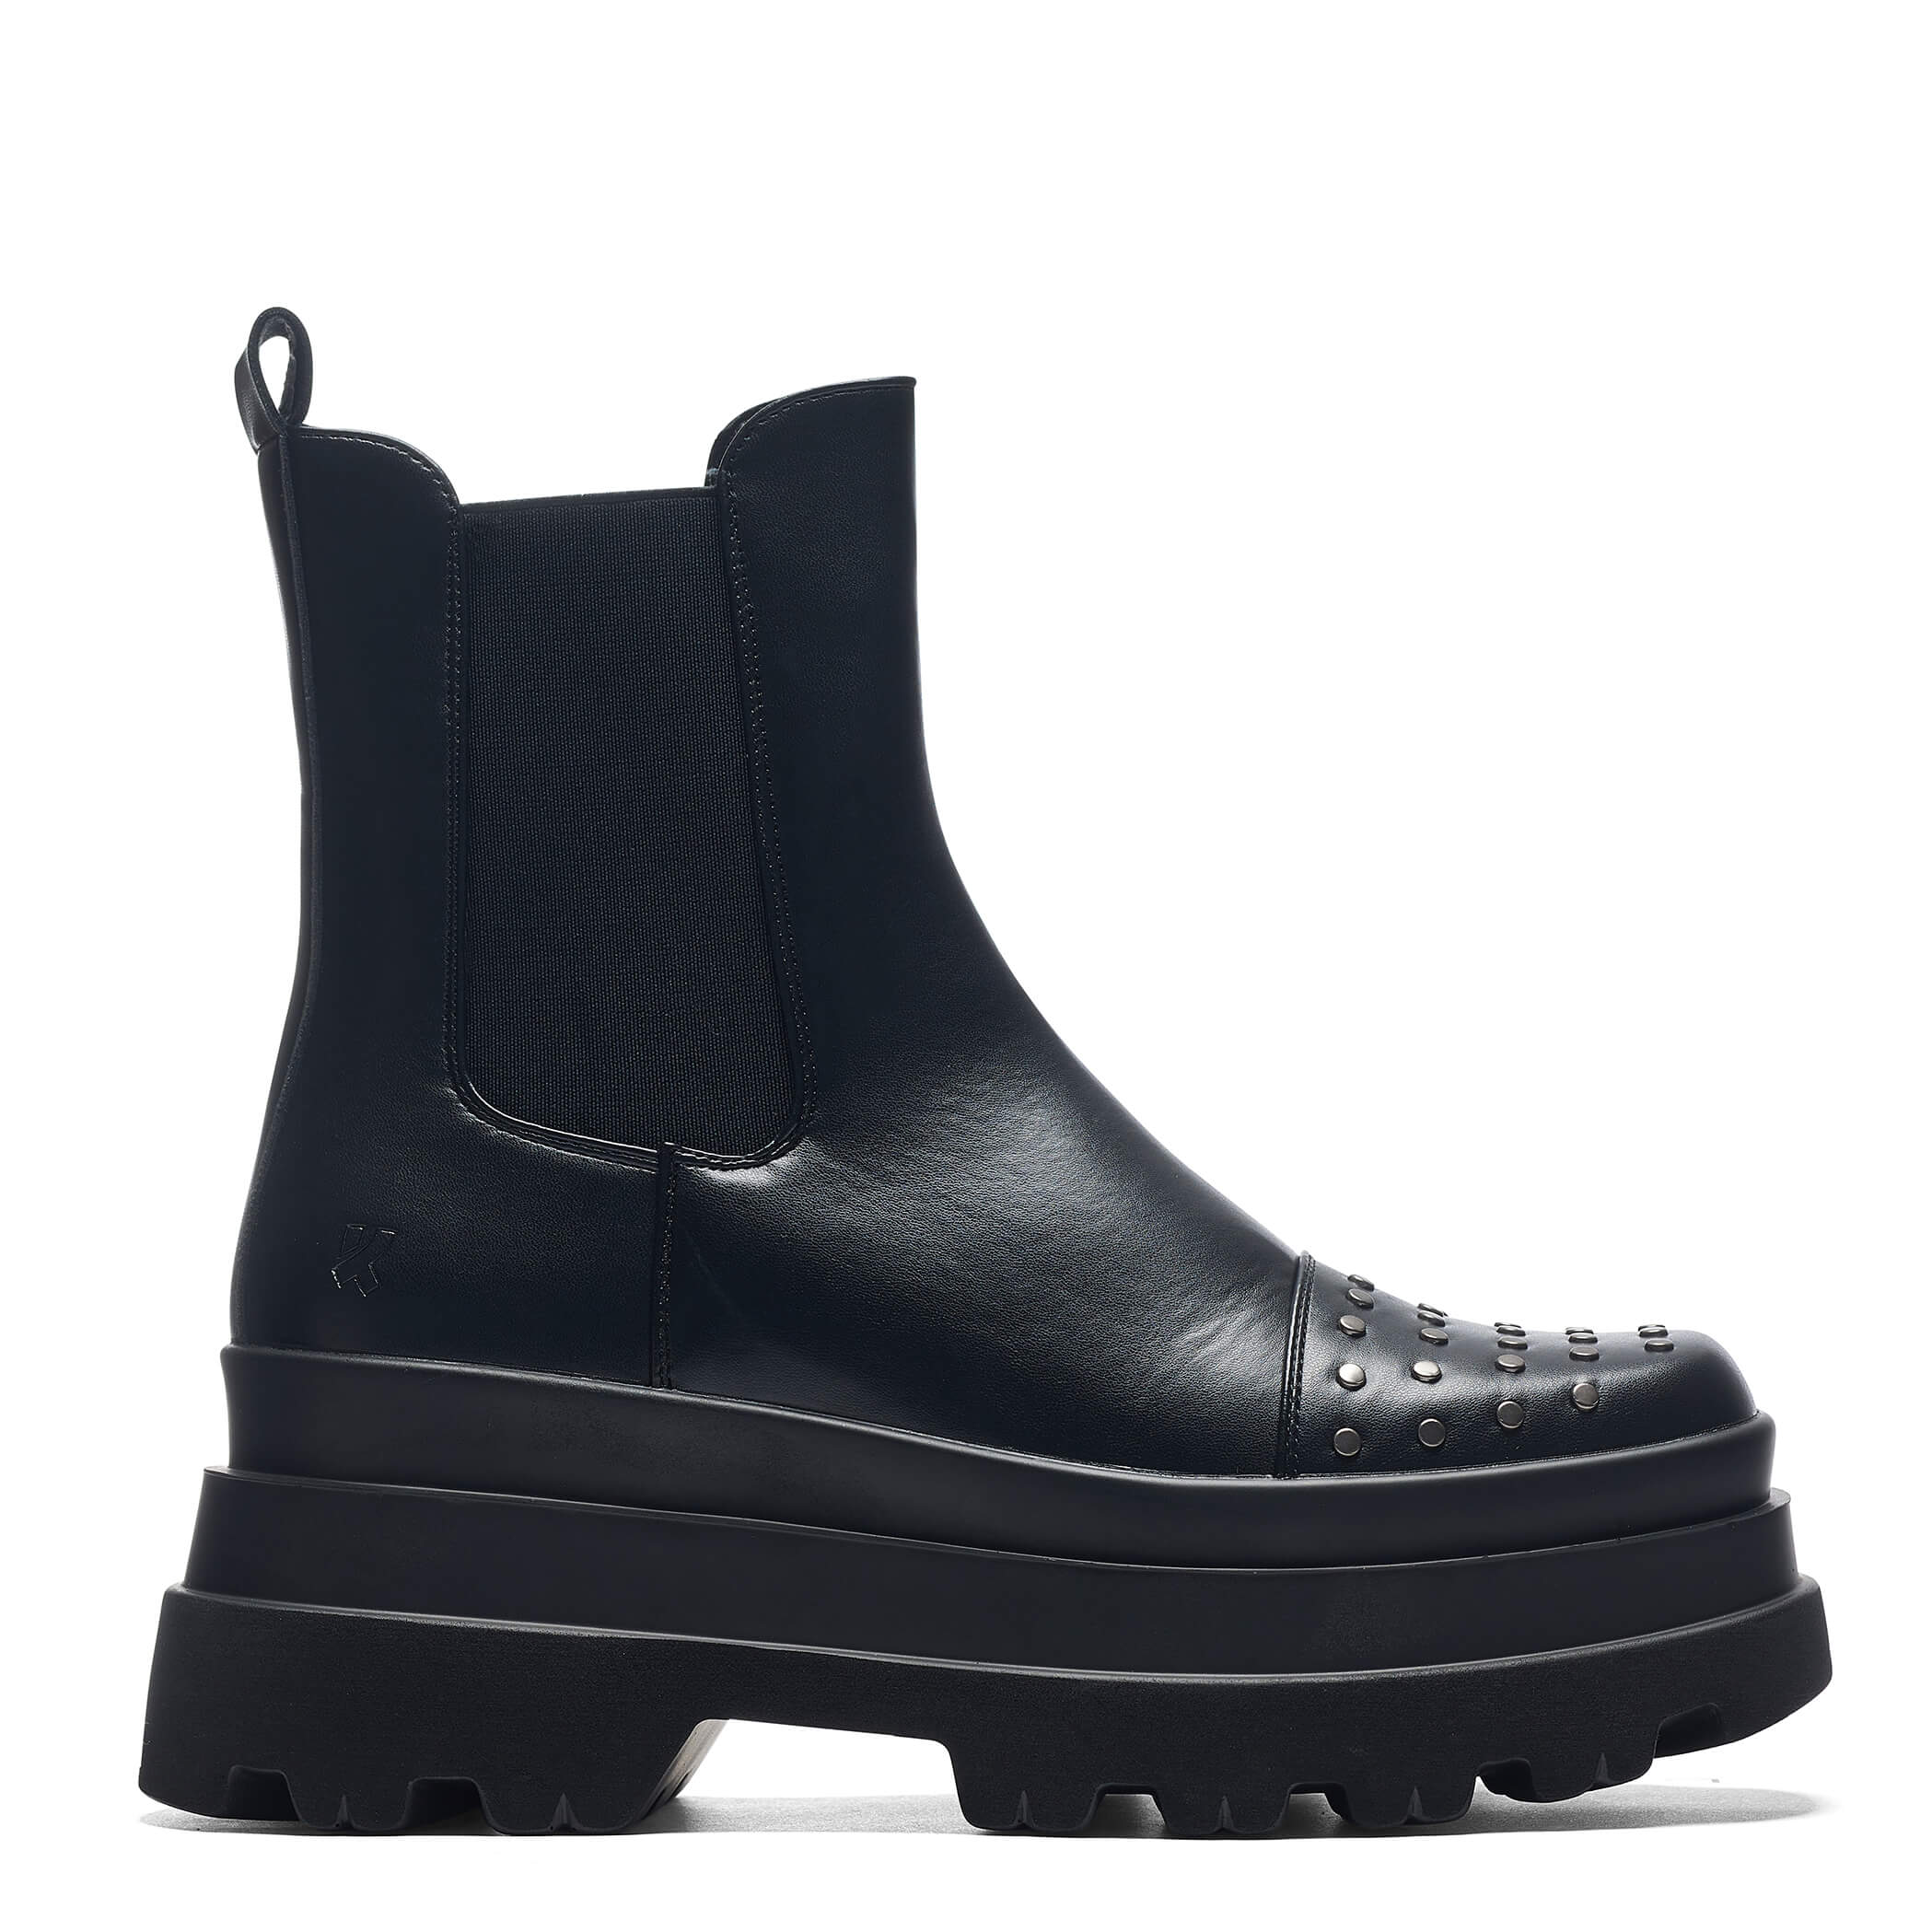 Silence Studded Trident Chelsea Boots - Black | KOI Footwear – KOI footwear